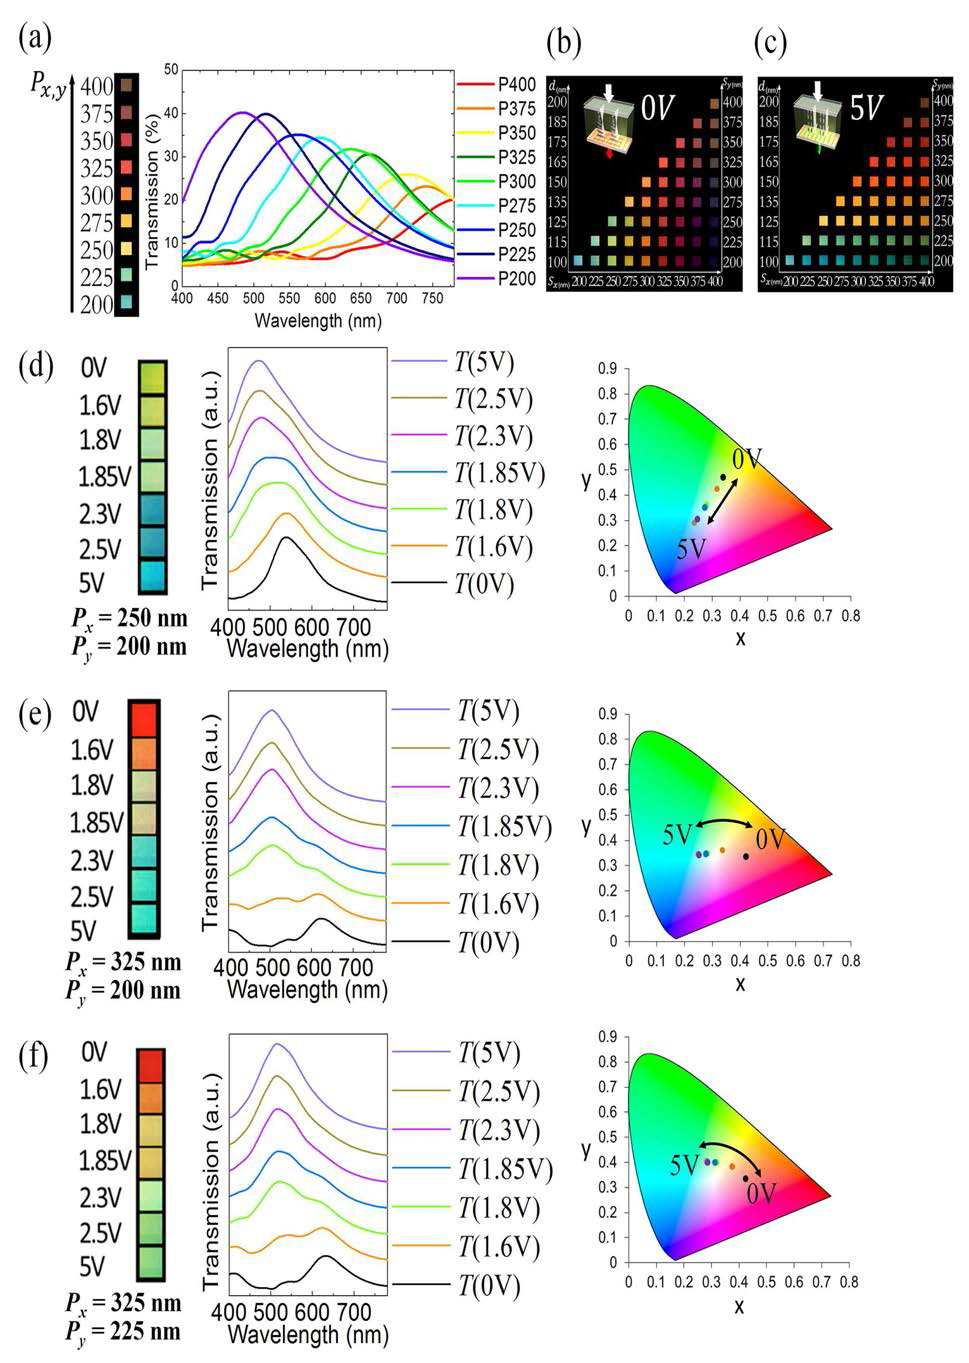 (a) TN-LC와 nanohole structures (hole 사이의 간격이 200~400nm인 구조체)의 결합 후 광학 현미경 투과 사진 및 spectrum 특성. (b-c) Asymmetric 구조를 가지는 nano-structure와 TN-LC가 결합된 소자에 인가전압을 각각 0V, 5V로 주었을 때의 투과색 변화 관찰. LC의 편광 효과에 의해 투과색도 변화 함. (d-f) Multi-color를 구현한 예. (d) Green-to-Blue, (e) Red-to-Blue, (f) Red-to-Green과 같이, RGB의 색상을 얻음